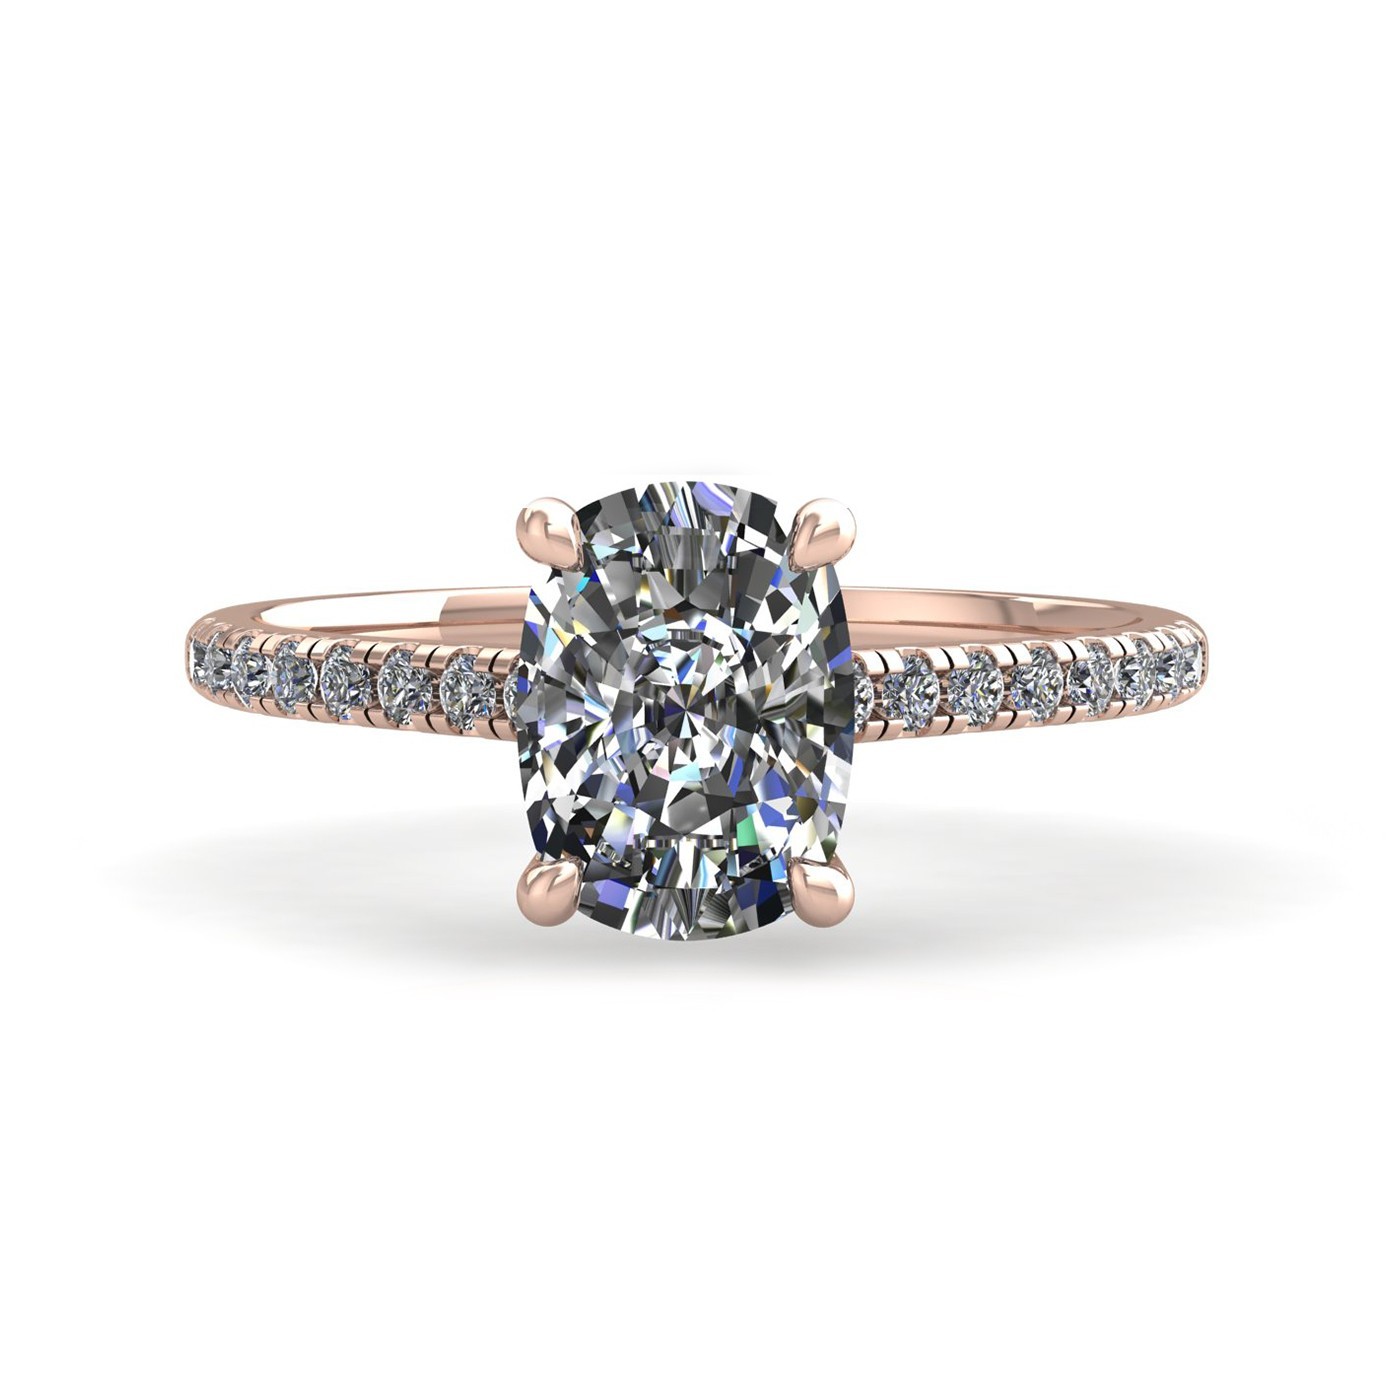 18k rose gold  4 prongs cushion cut diamond engagement ring with whisper thin pavÉ set band